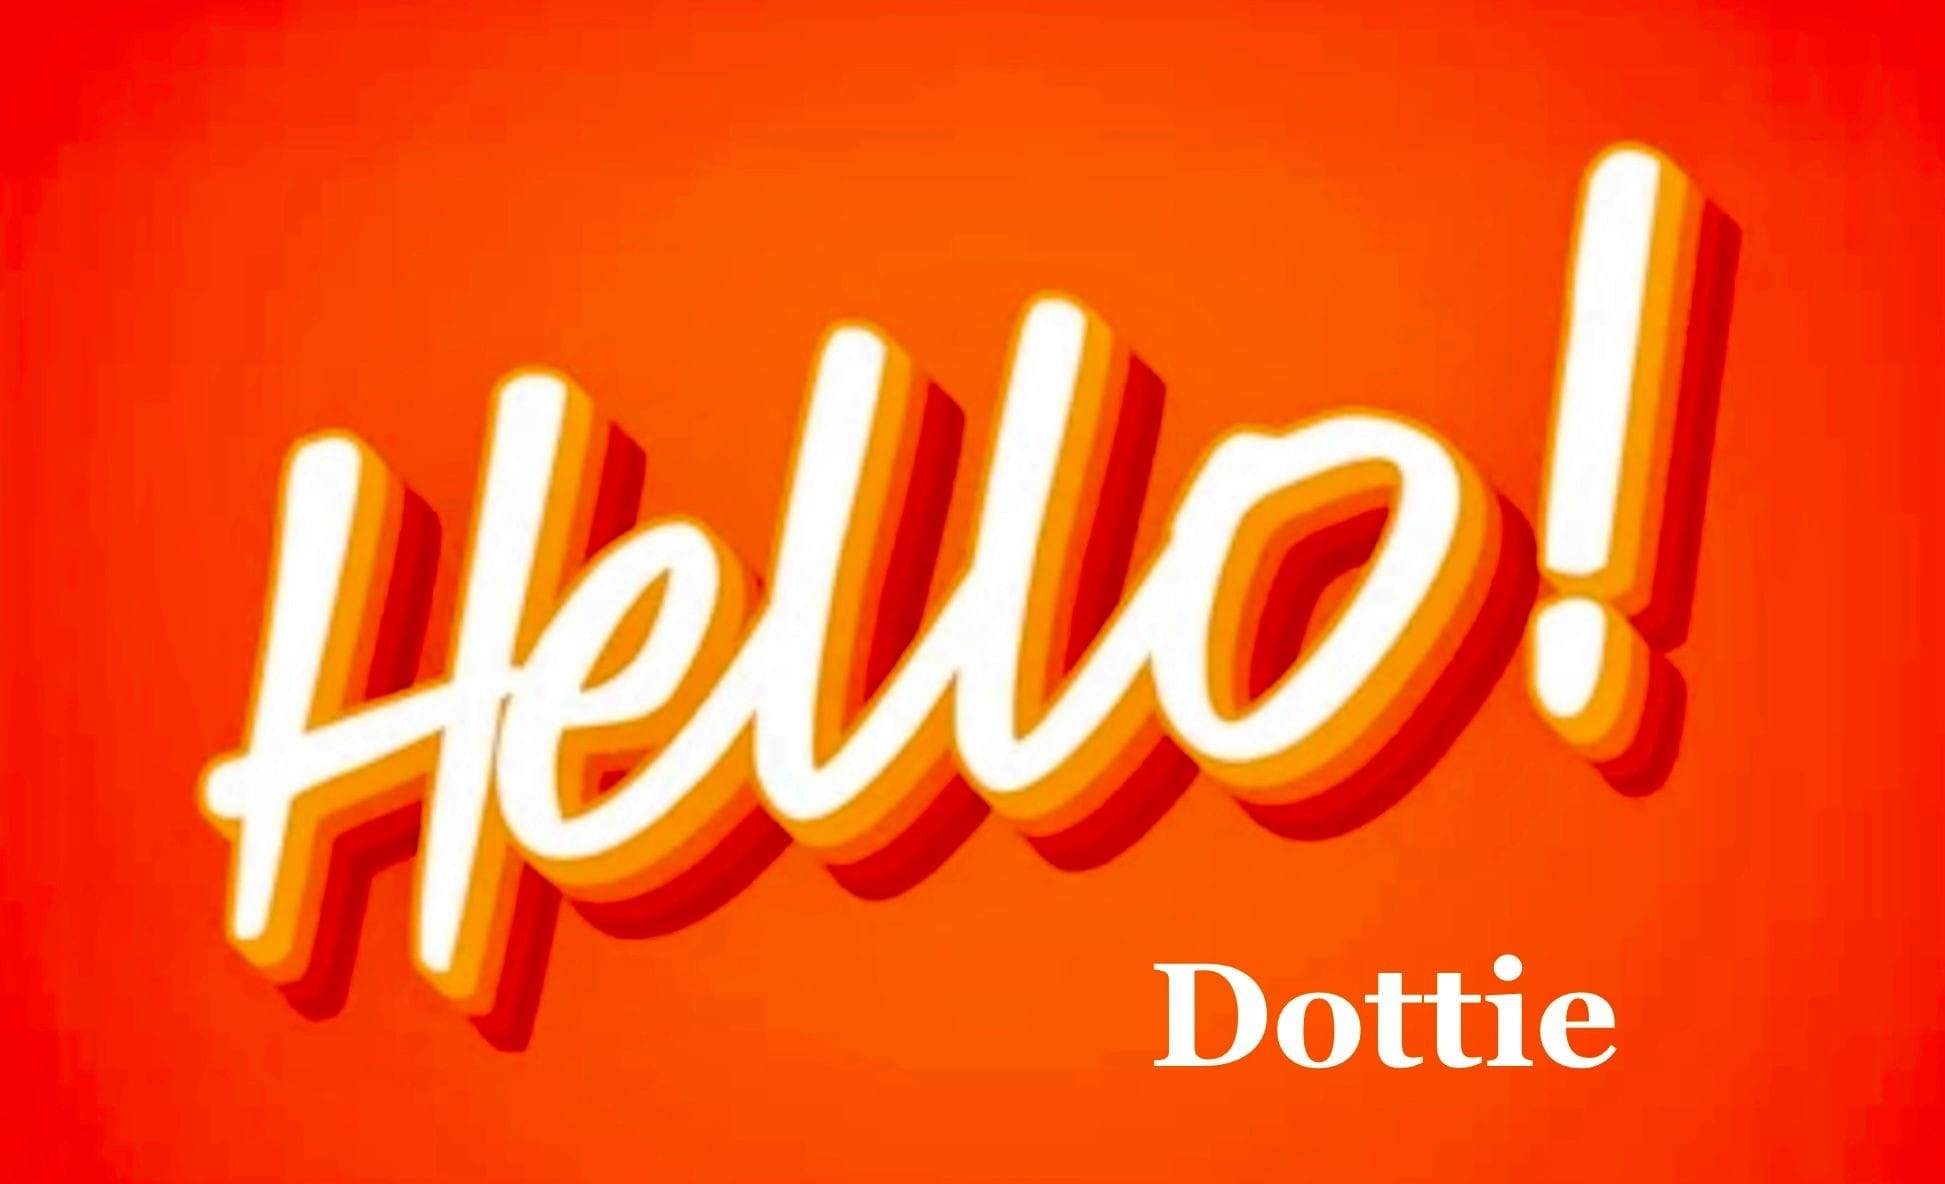 Dottie Dexter shares a friendly HELLO! Dottie with everyone!